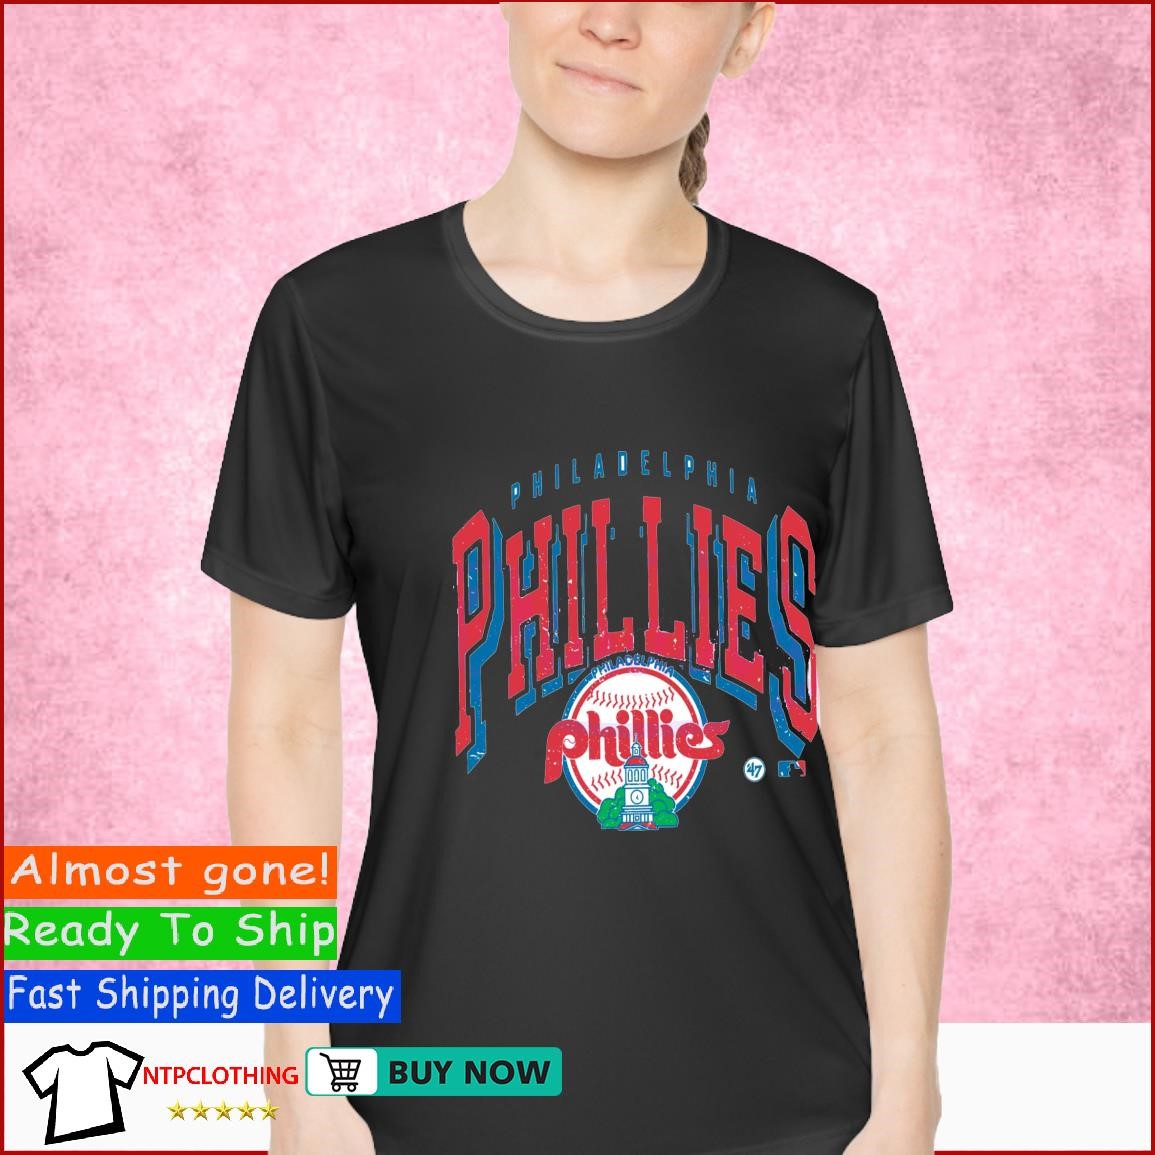 high hopes phillies shirt